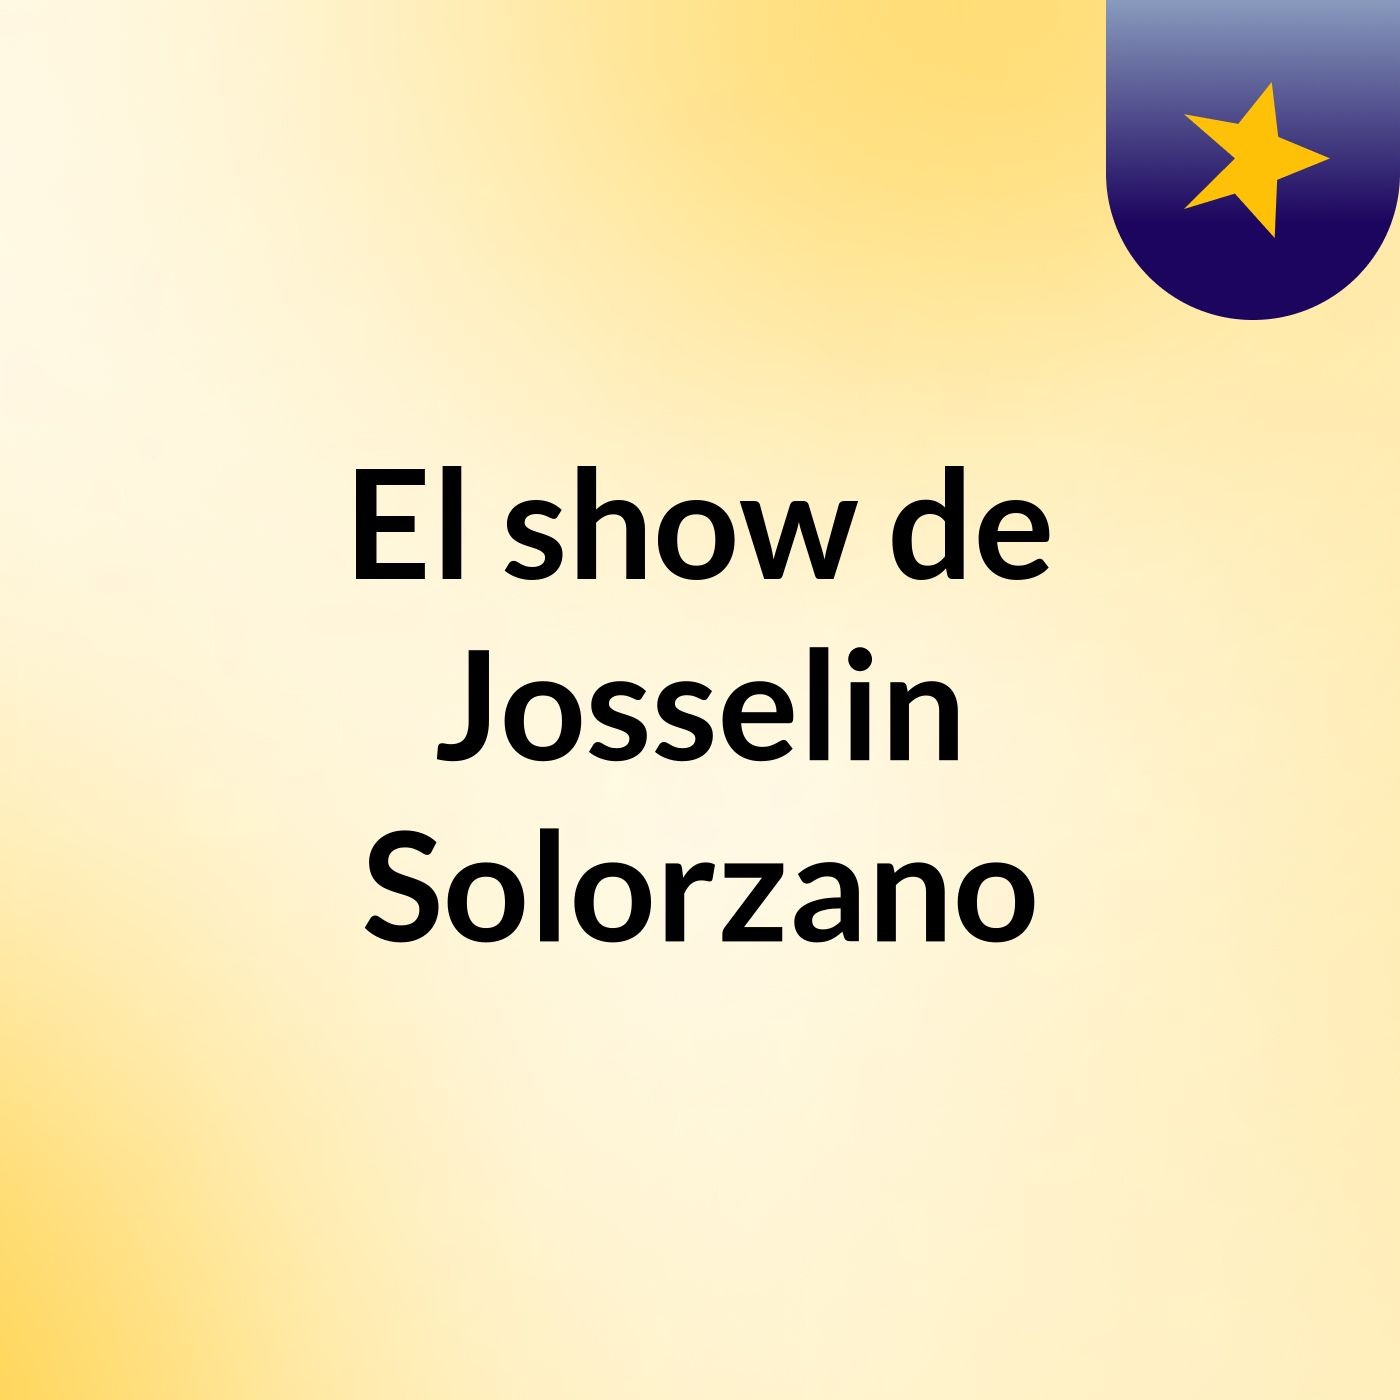 El show de Josselin Solorzano